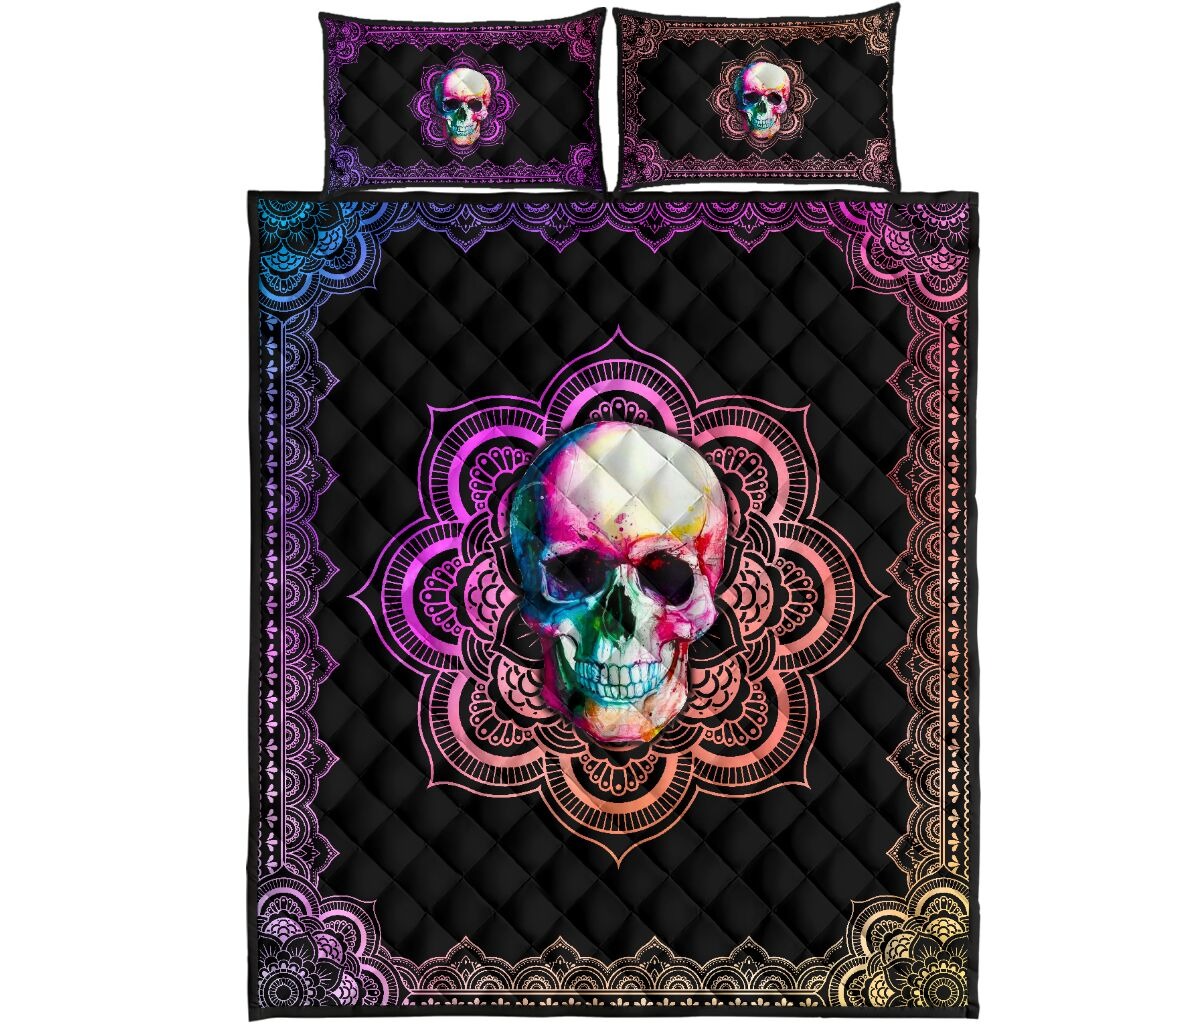 Skull mandala color quilt bedding set4